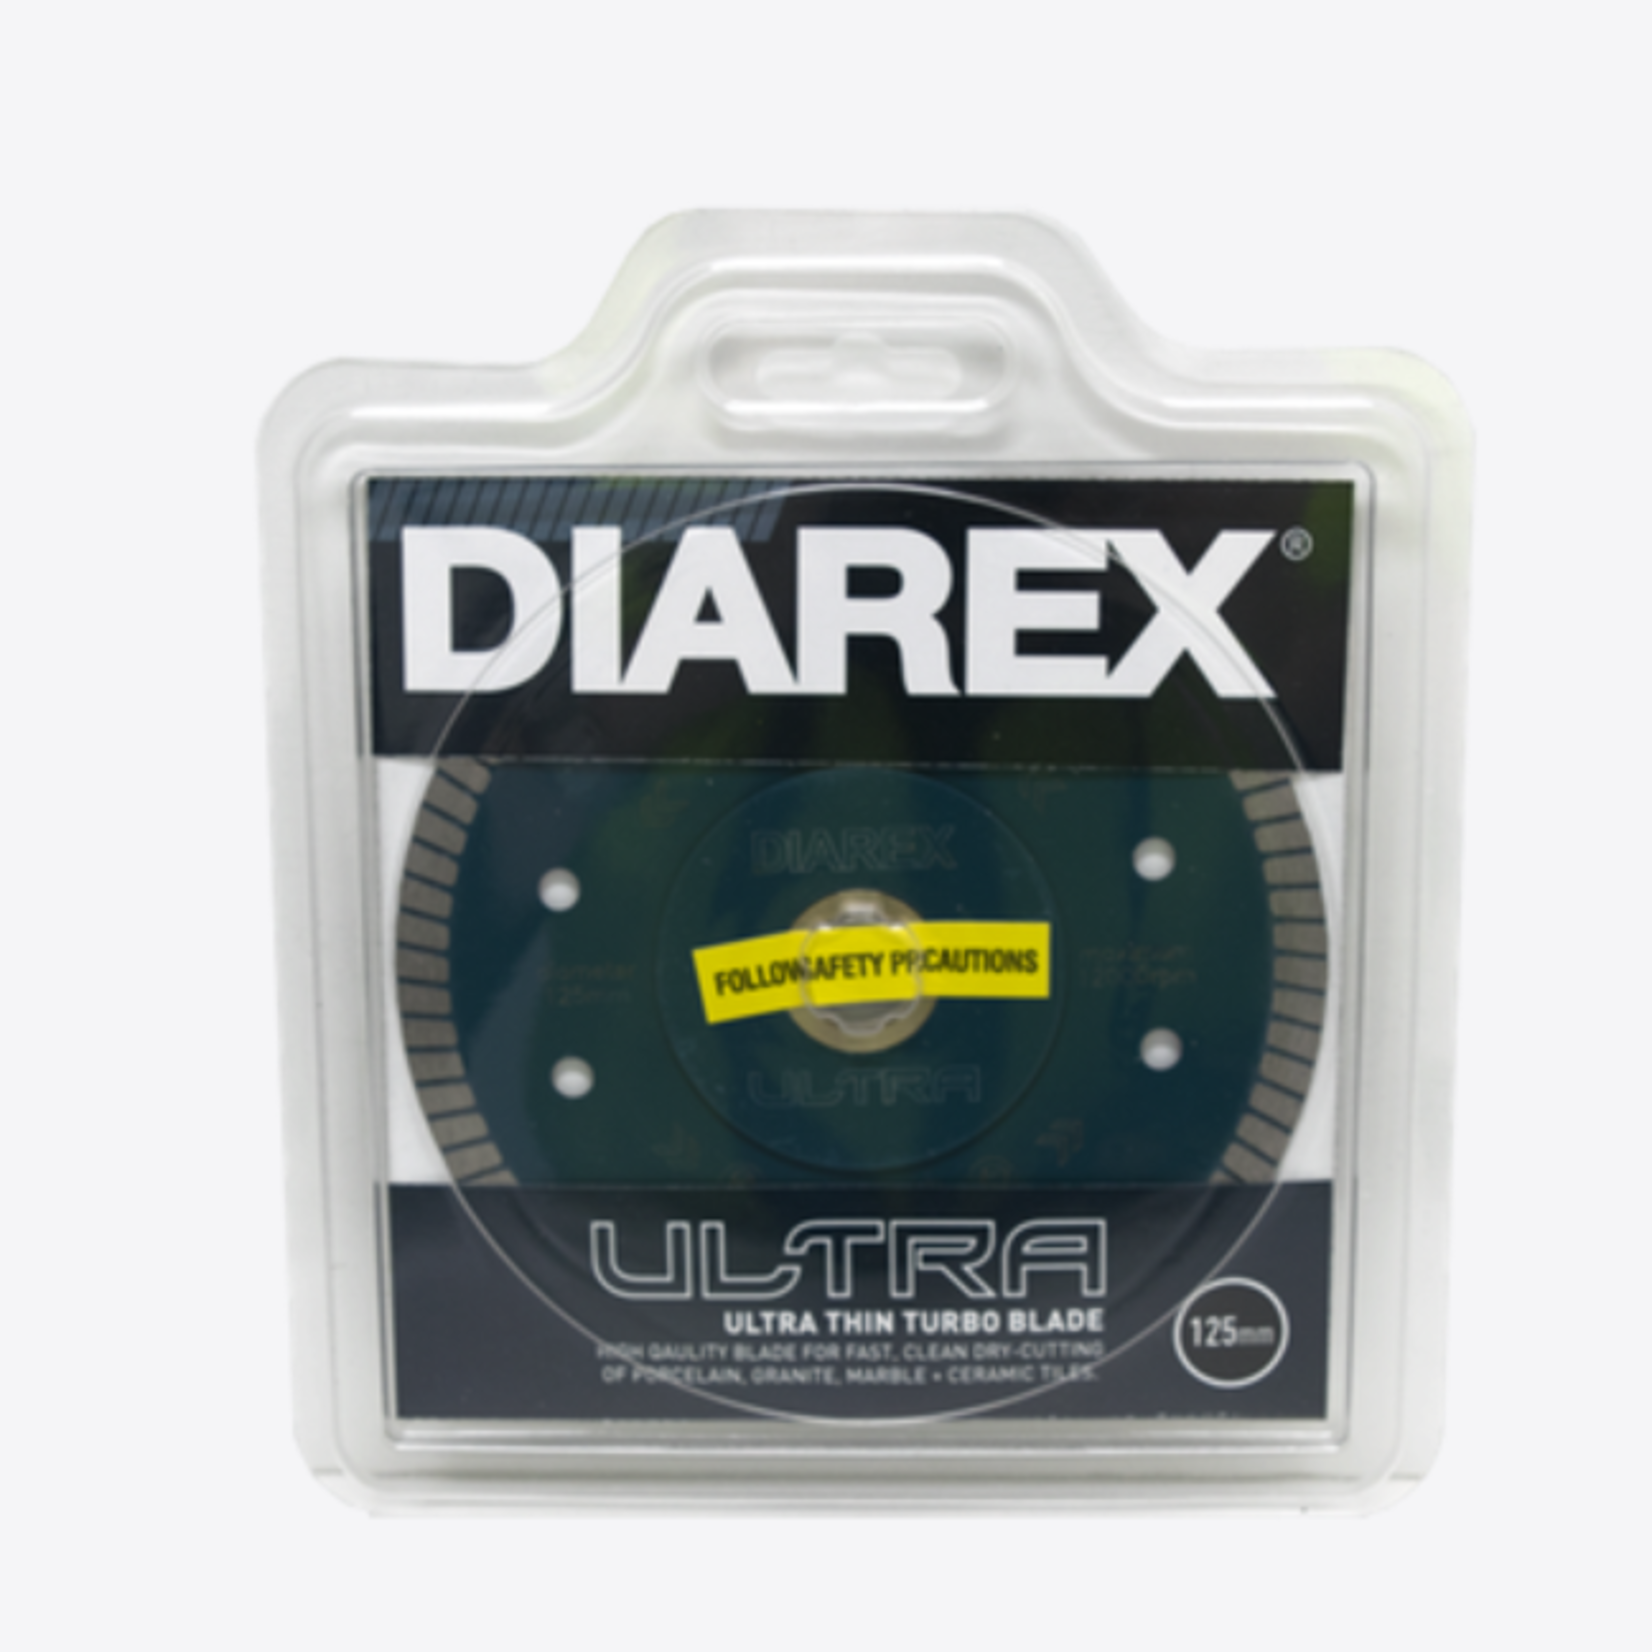 Diarex 115mm Diarex ULTRA Turbo Ultra thin - for Porcelain Teal - 22.2mm bore